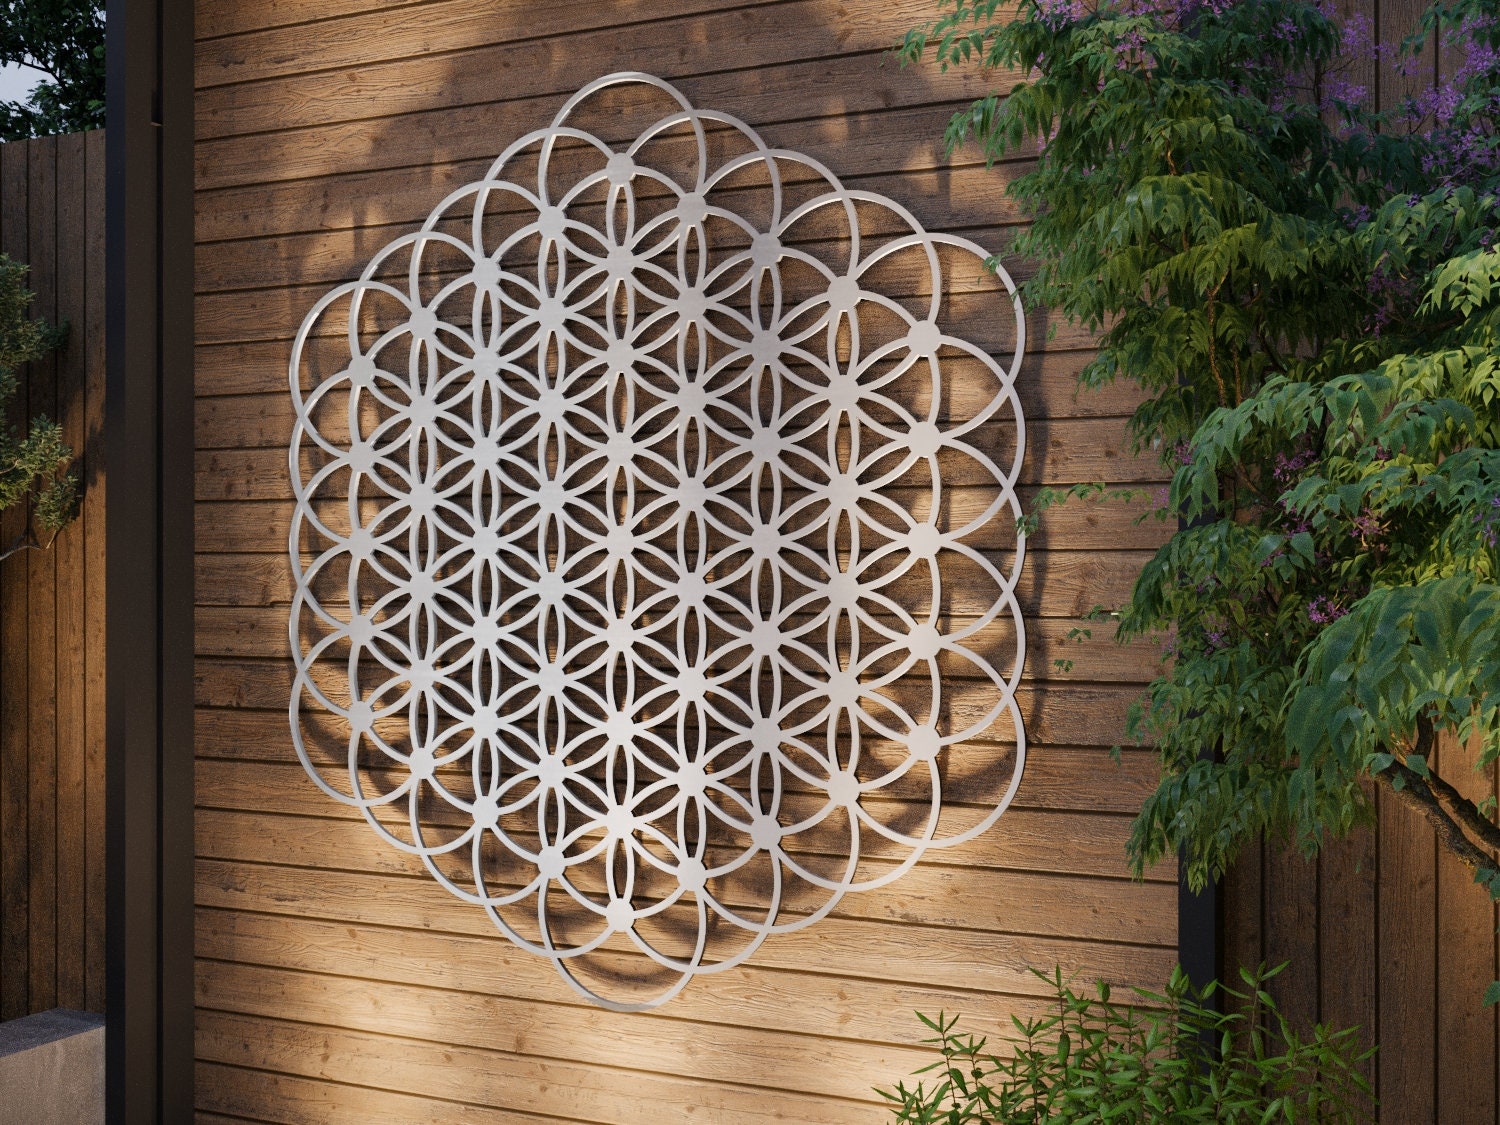 Flower of Life Outdoor Metal Wall Art Sculpture, Sacred Geometry Wall